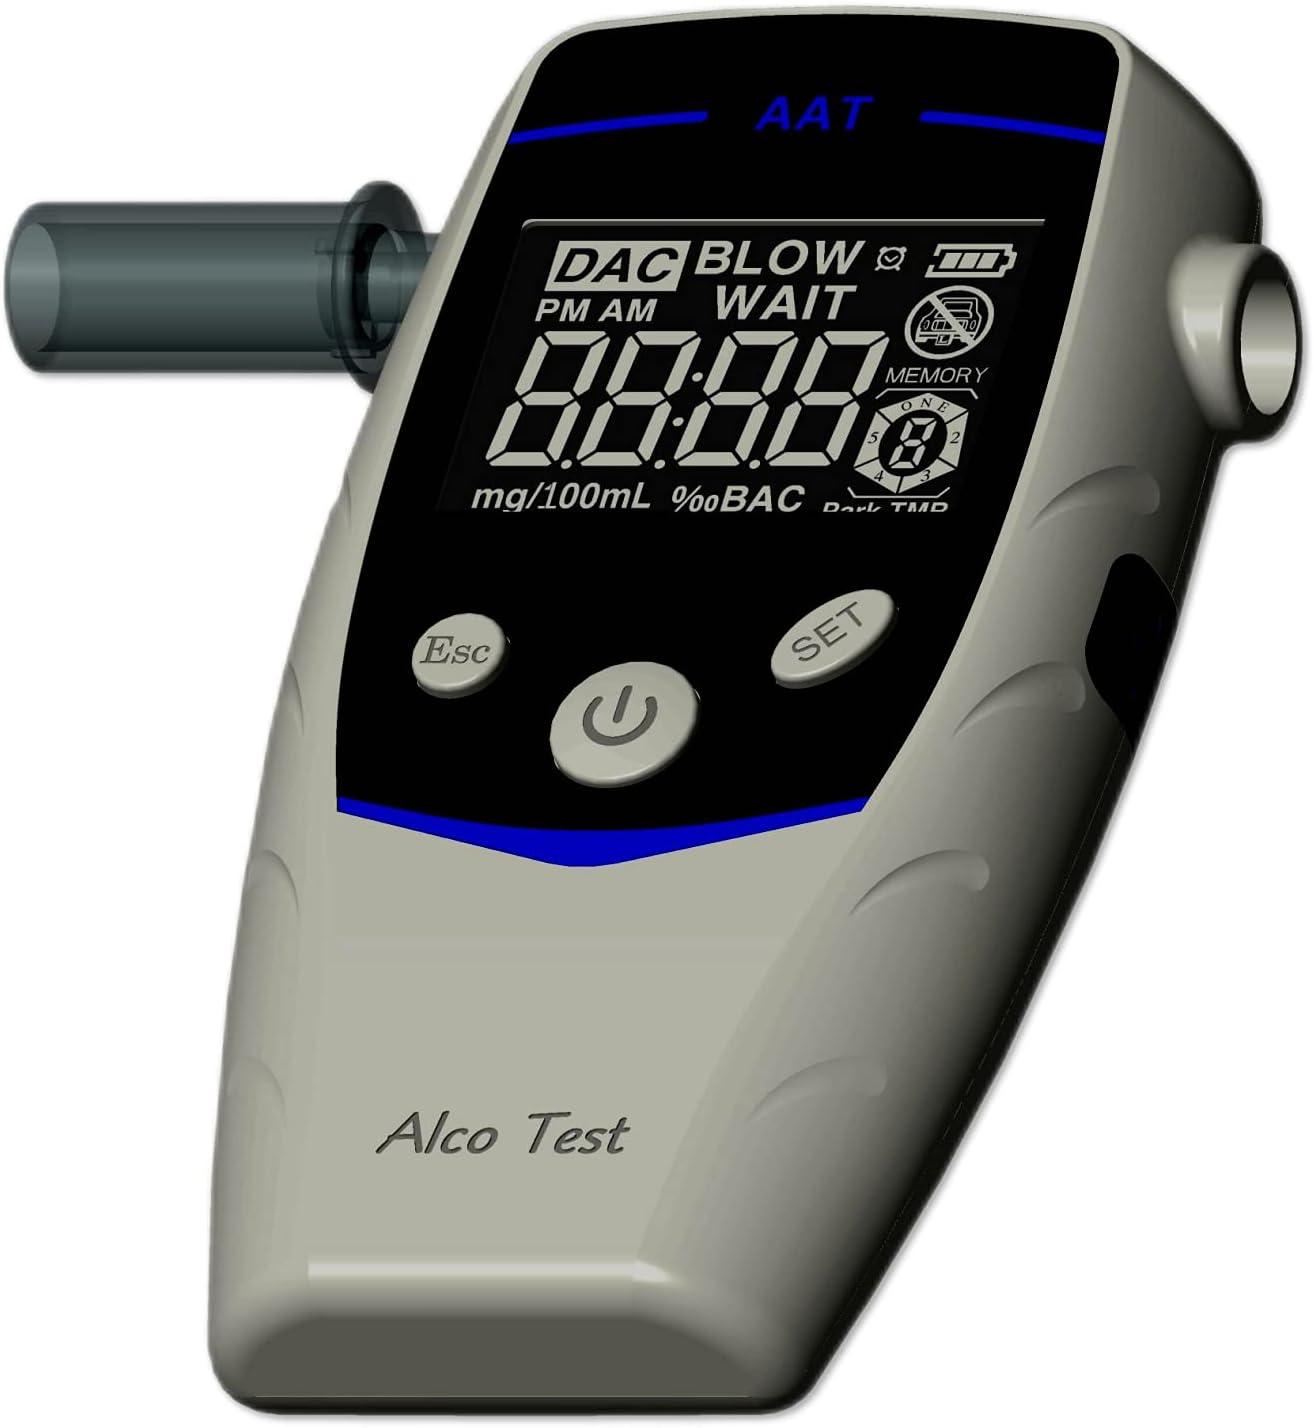 Alco-Sensor III Breath Alcohol Tester